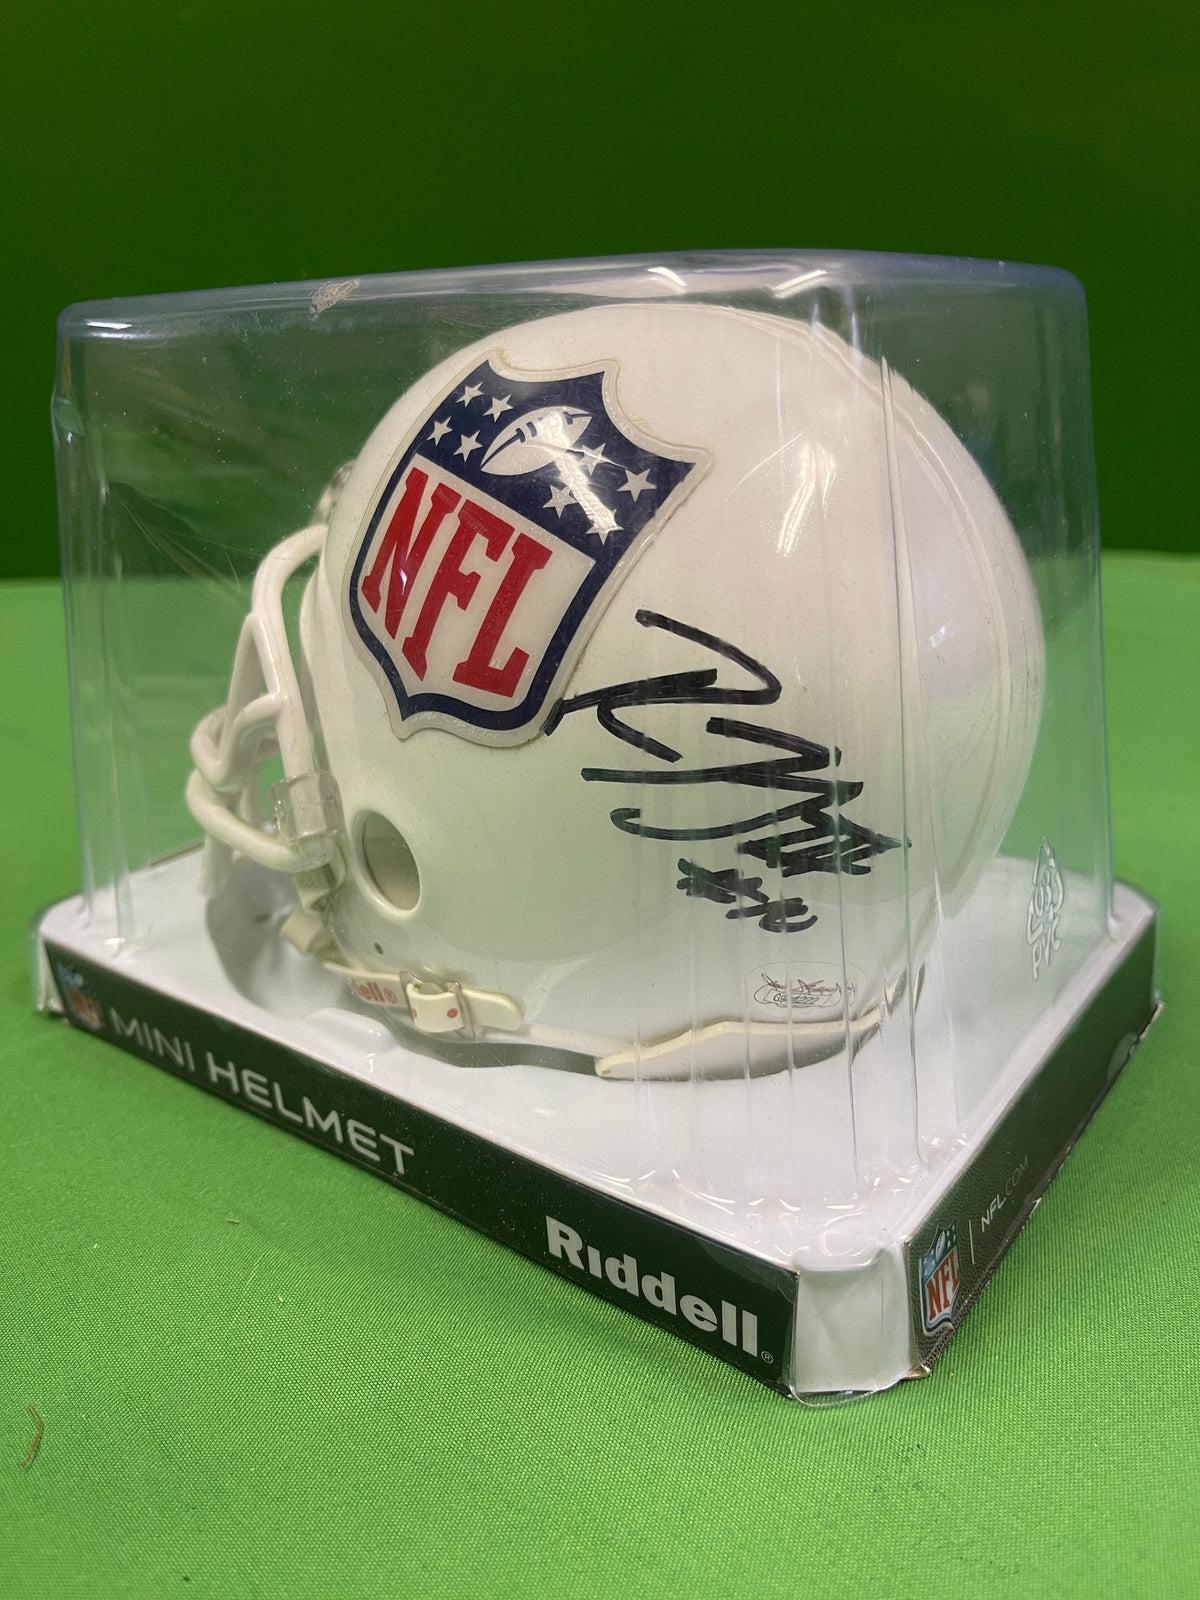 NFL Eclipse Robert Griffin III RG3 Alternate Riddell SIGNED JSA Mini Helmet